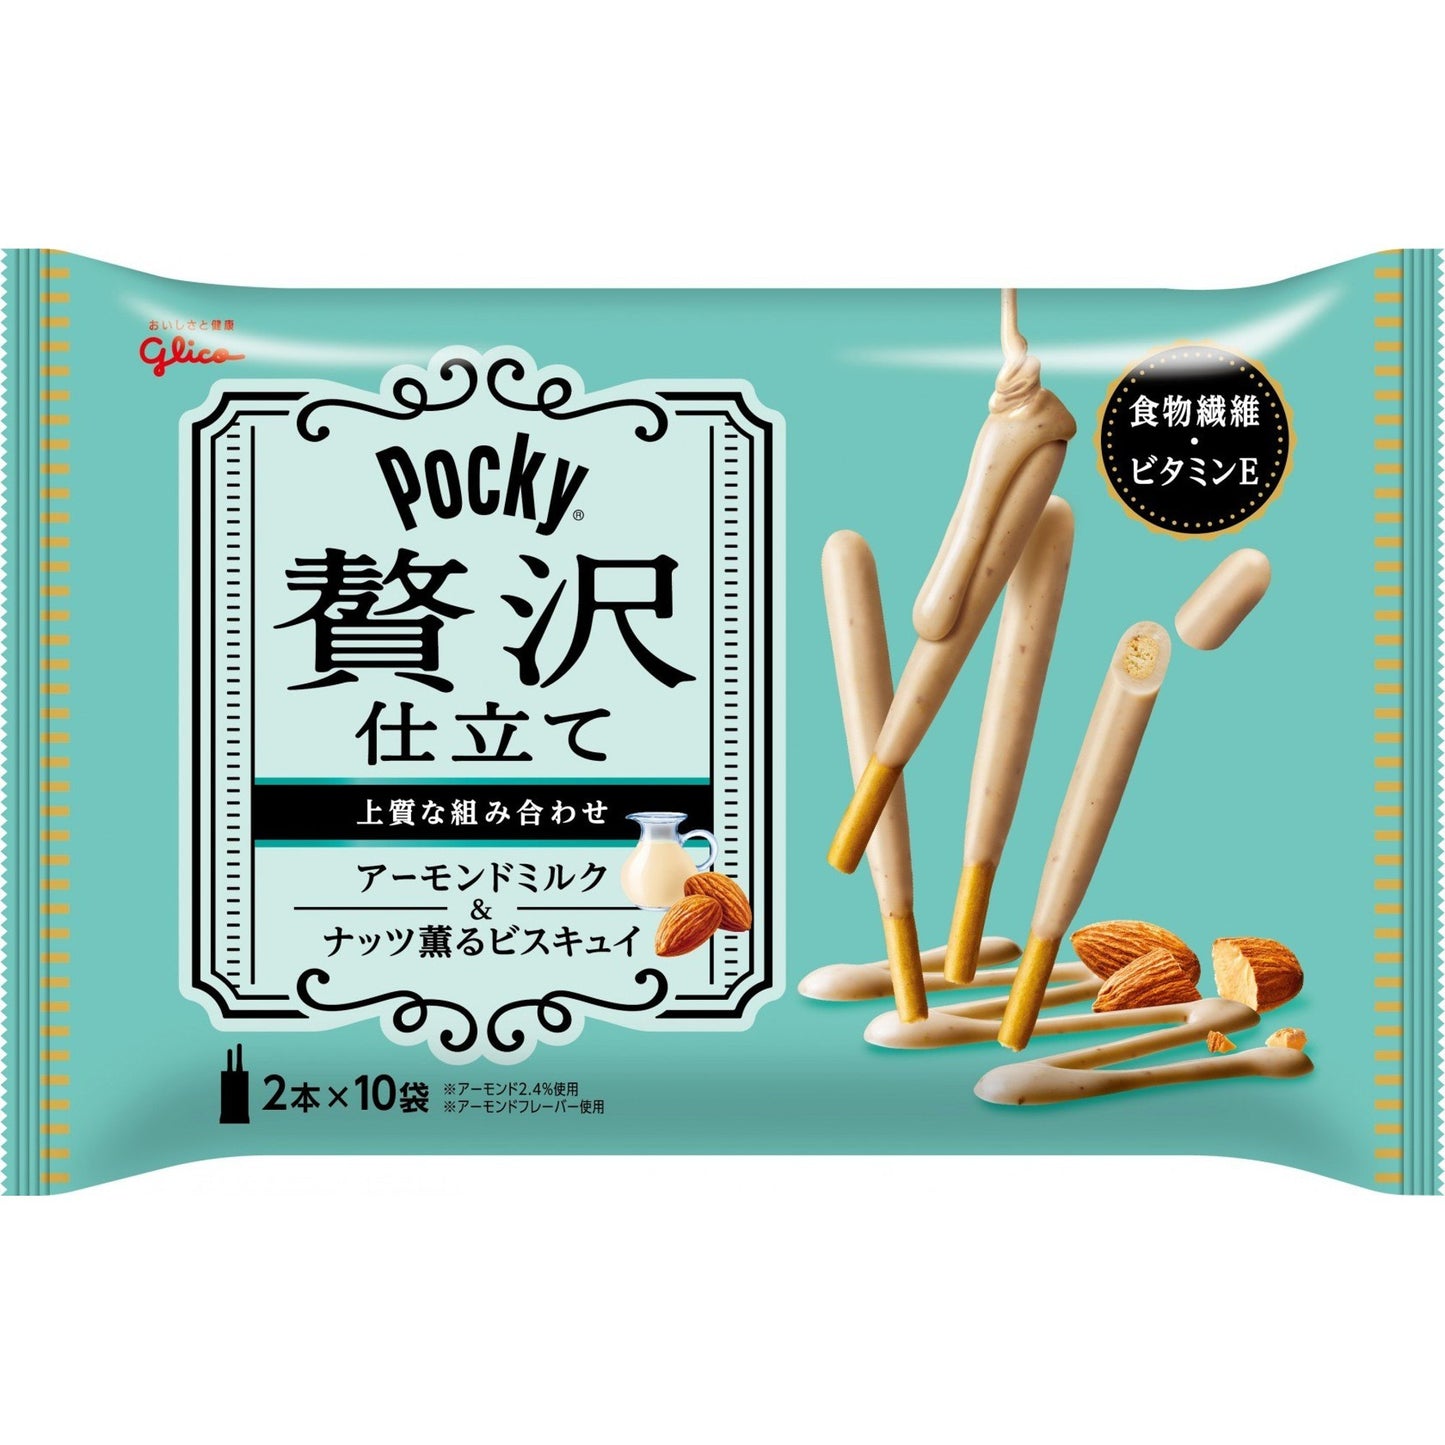 [Glico][Pocky luxury tailoring almond milk]